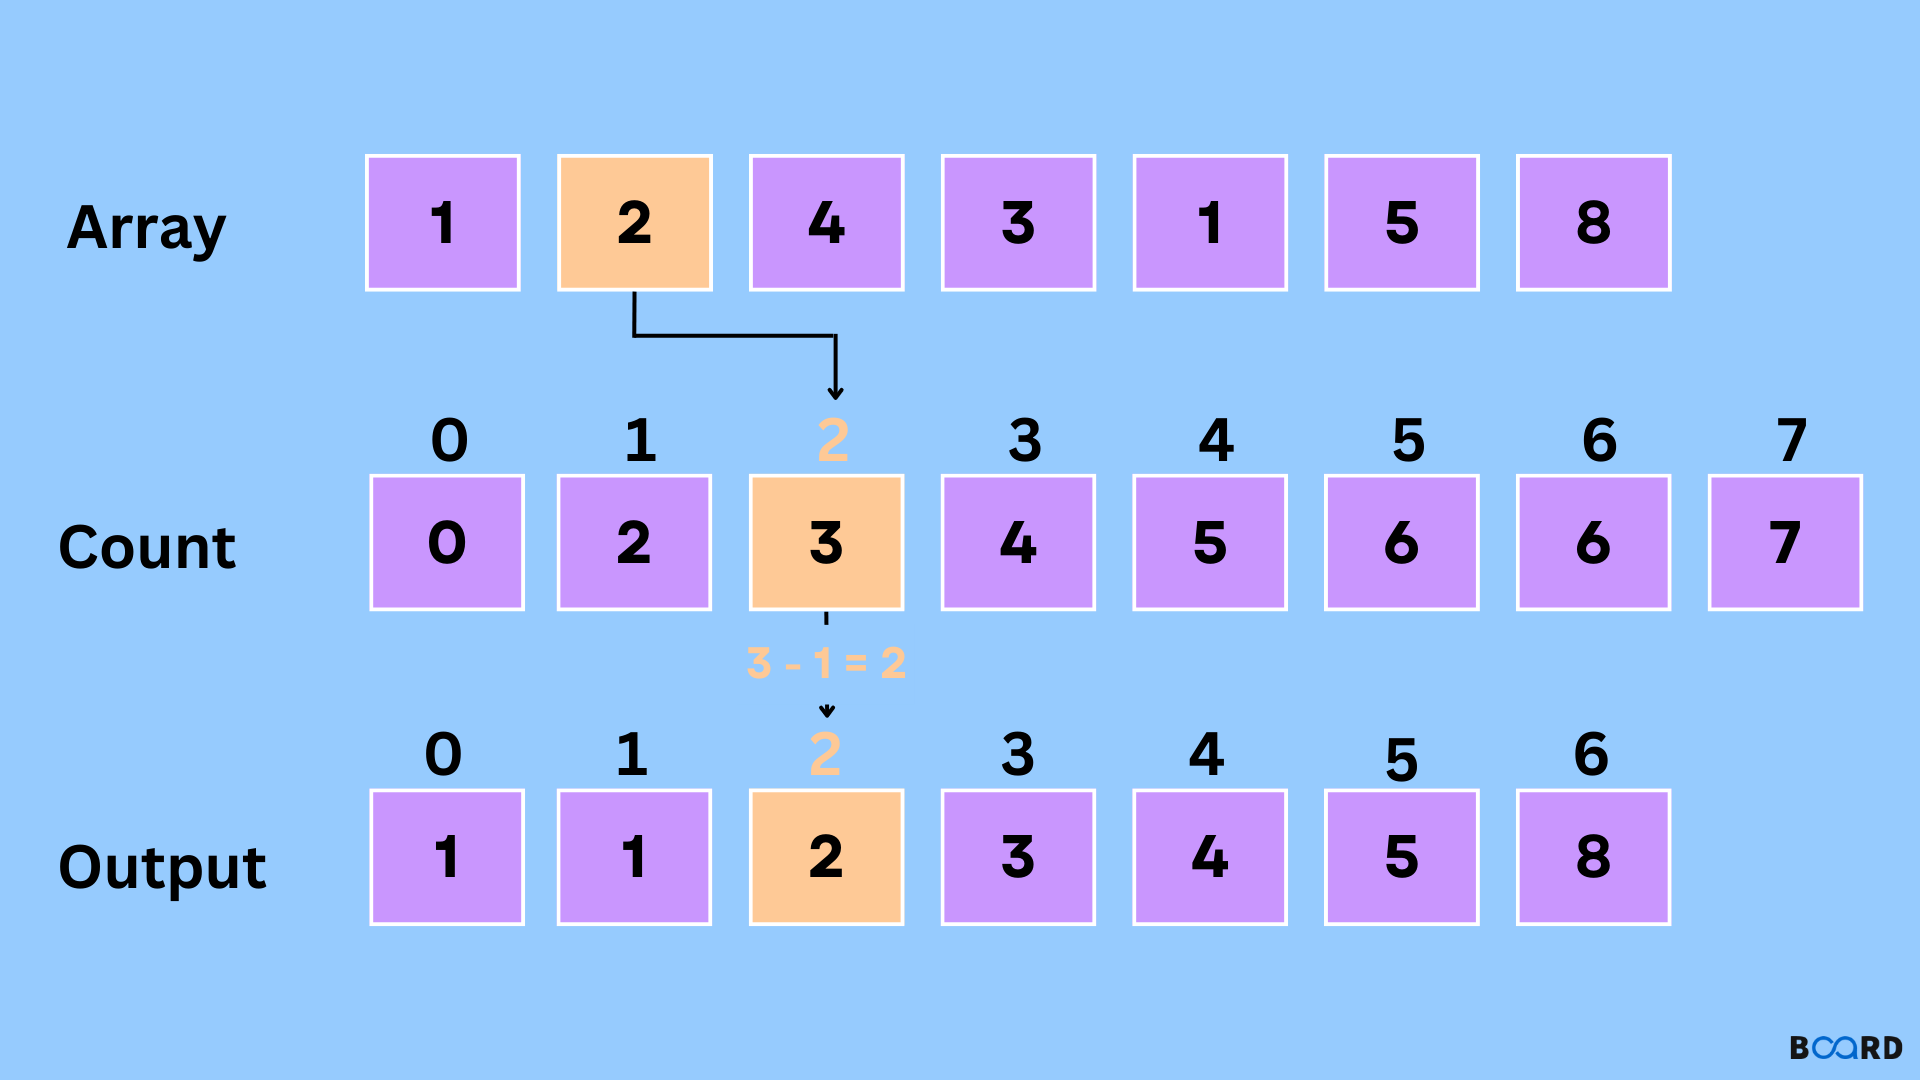 Counting Sort Algorithm: Using C++